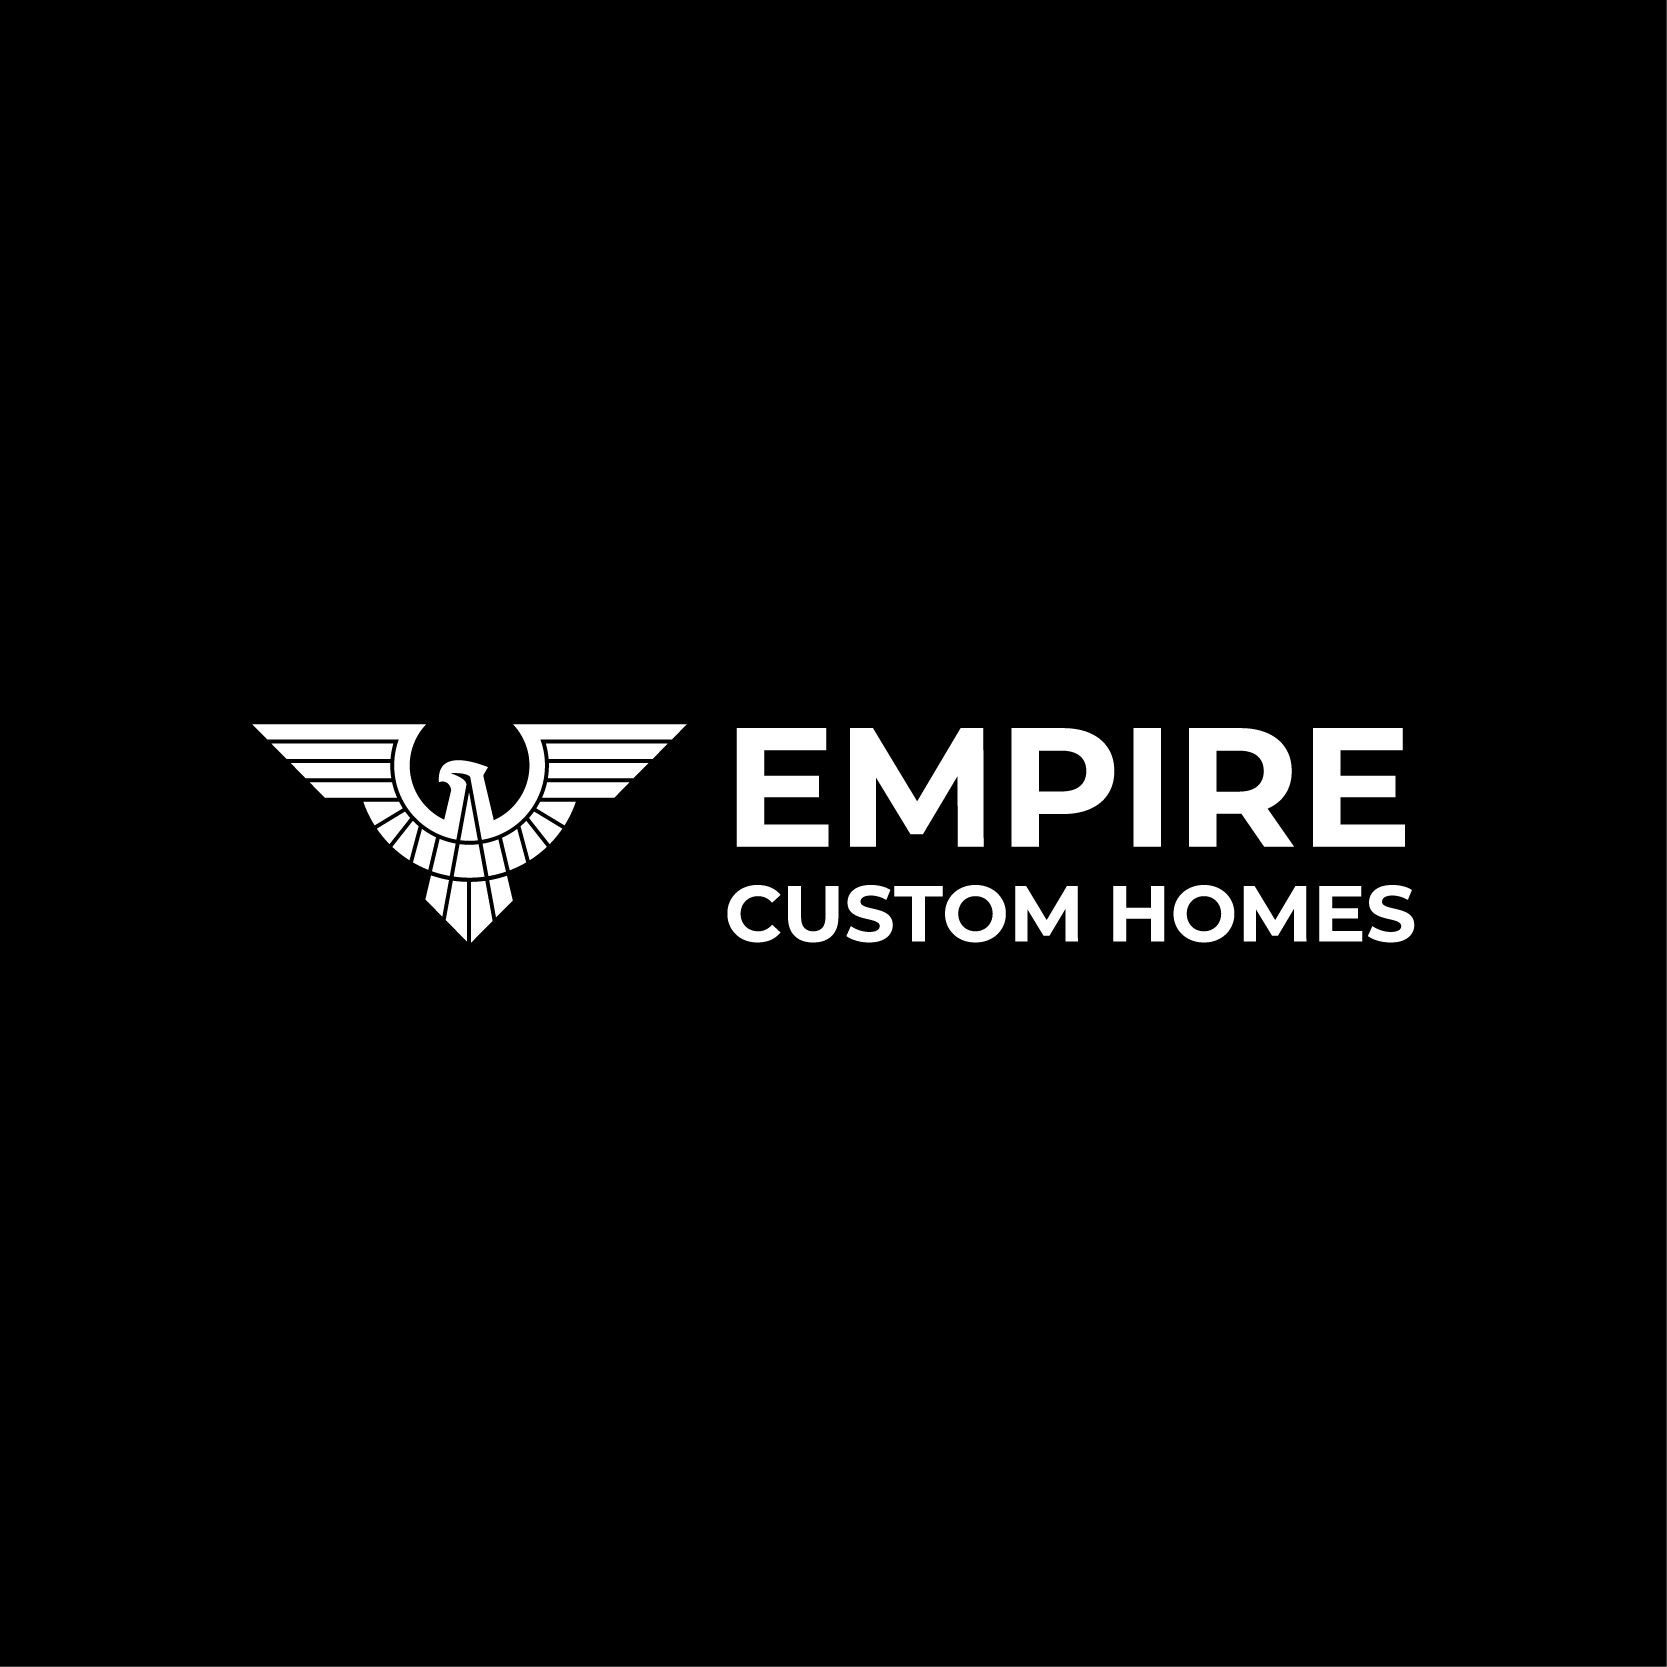 Empire Custom Homes